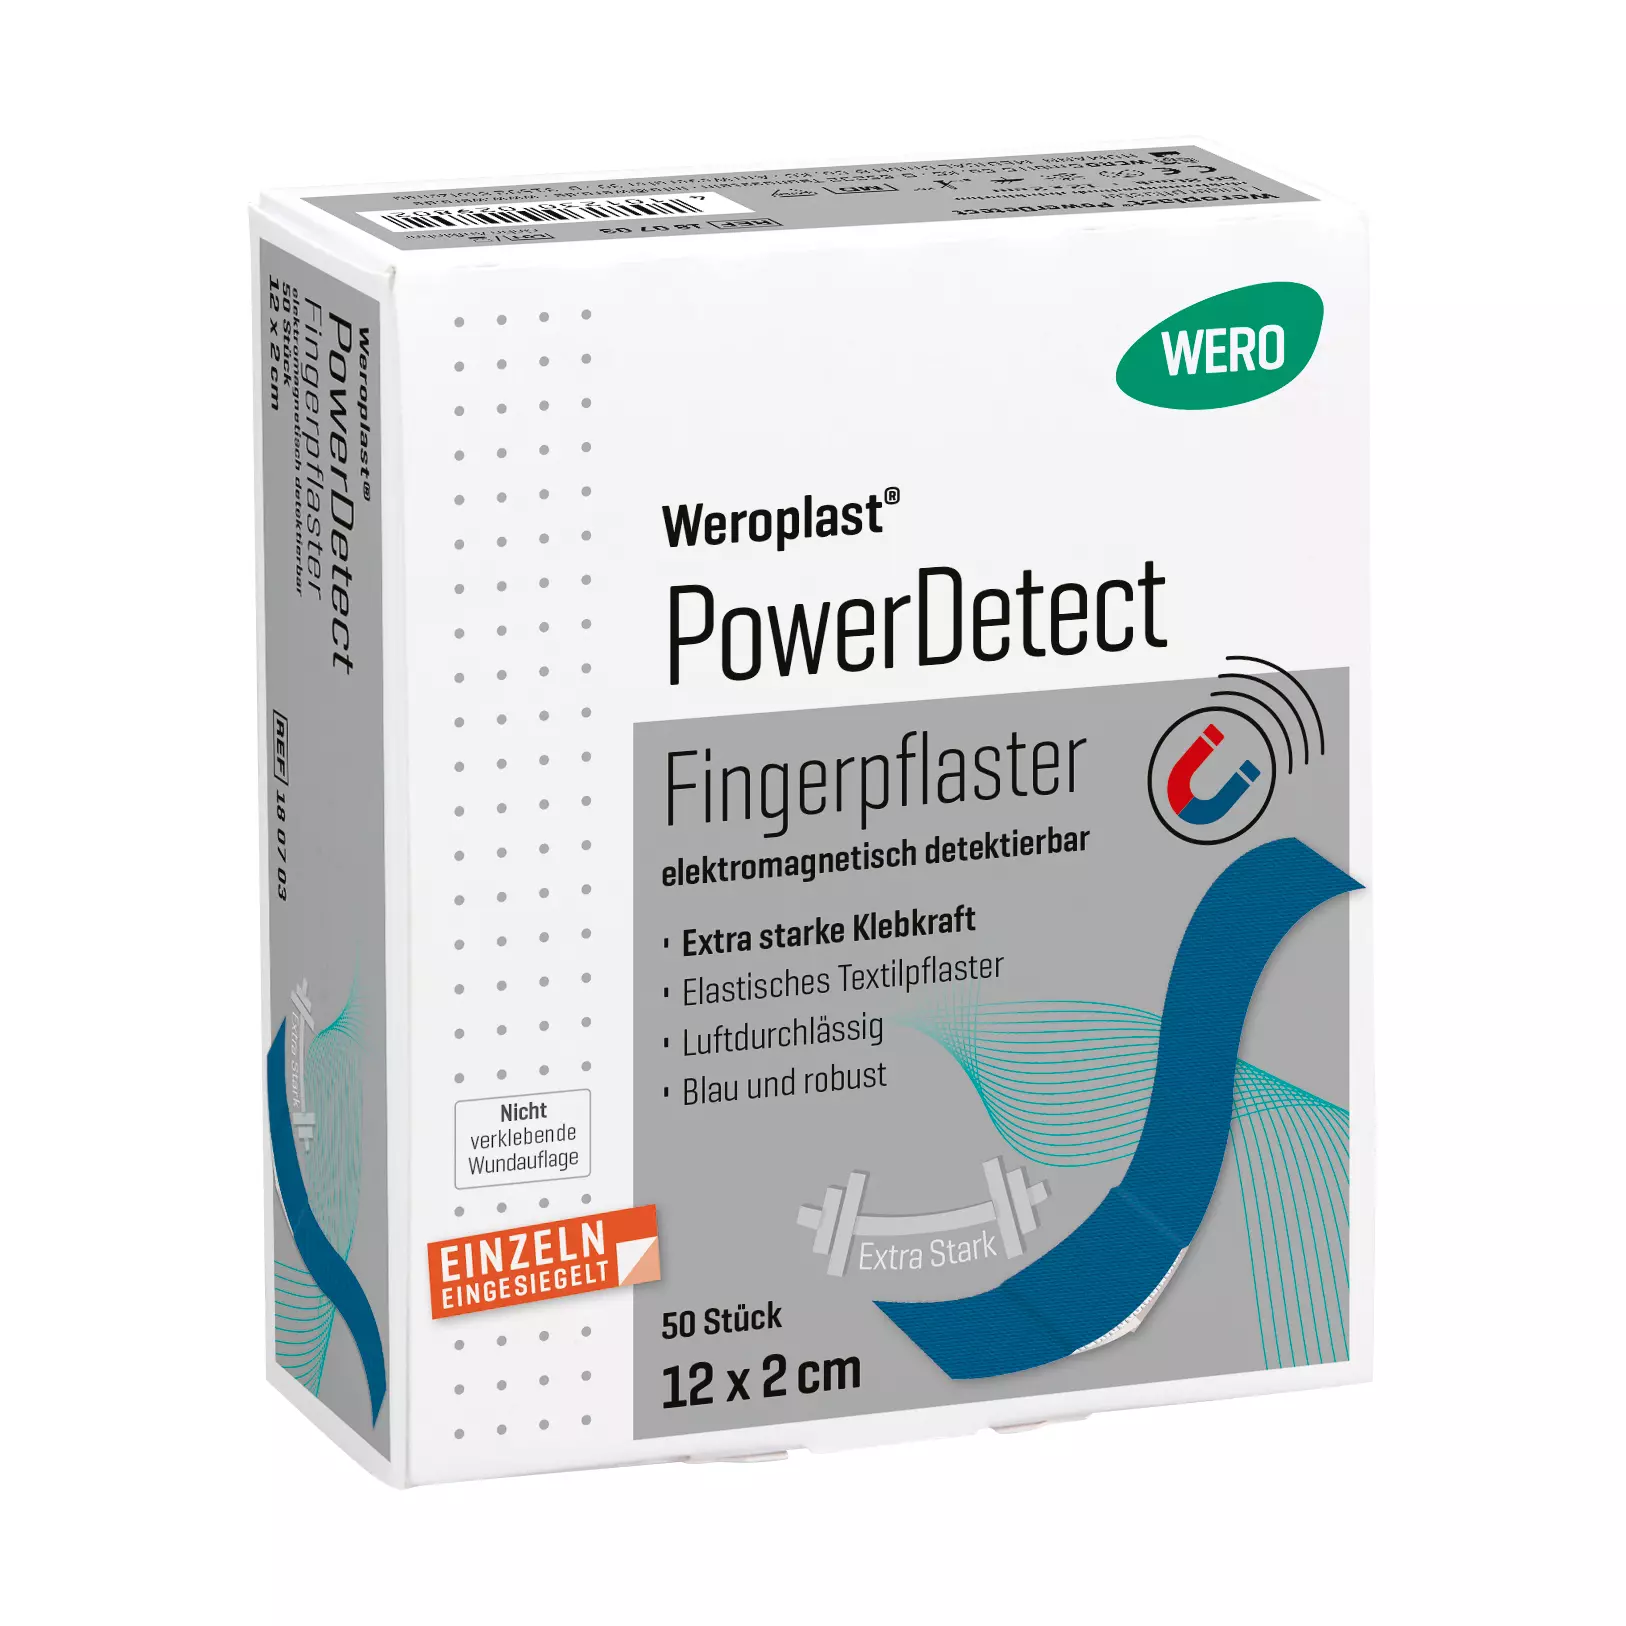 Weroplast® PowerDetect Fingerpflaster - 2 cm, 12 cm, 2 cm